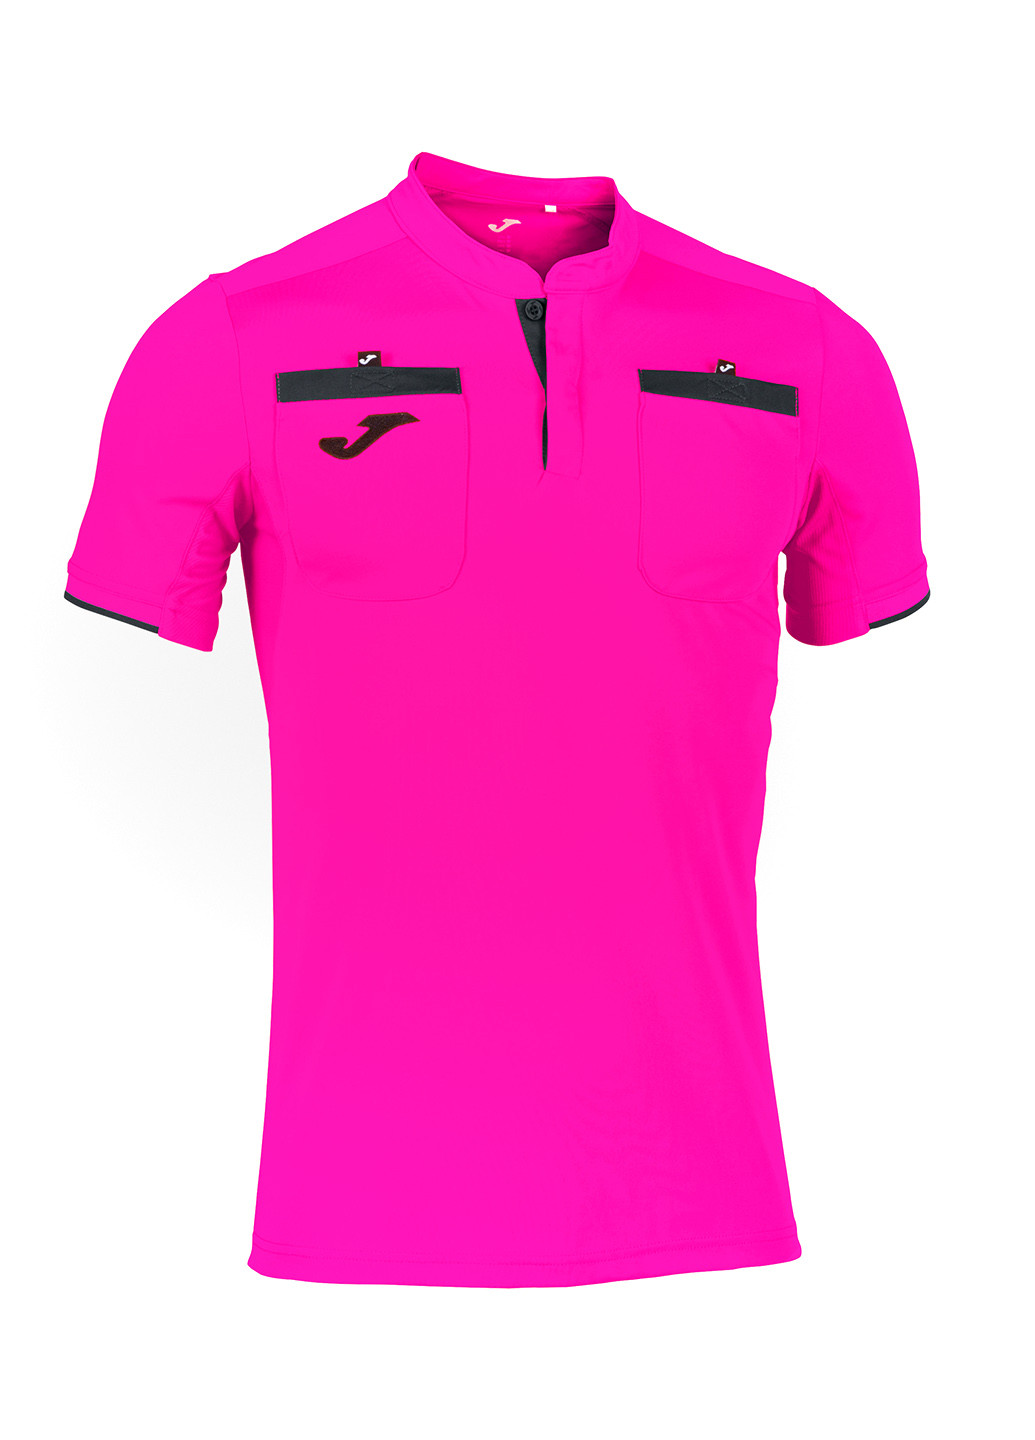 Фуксиновая (цвета Фуксия) футболка-судейская футболка referee для мужчин Joma с логотипом